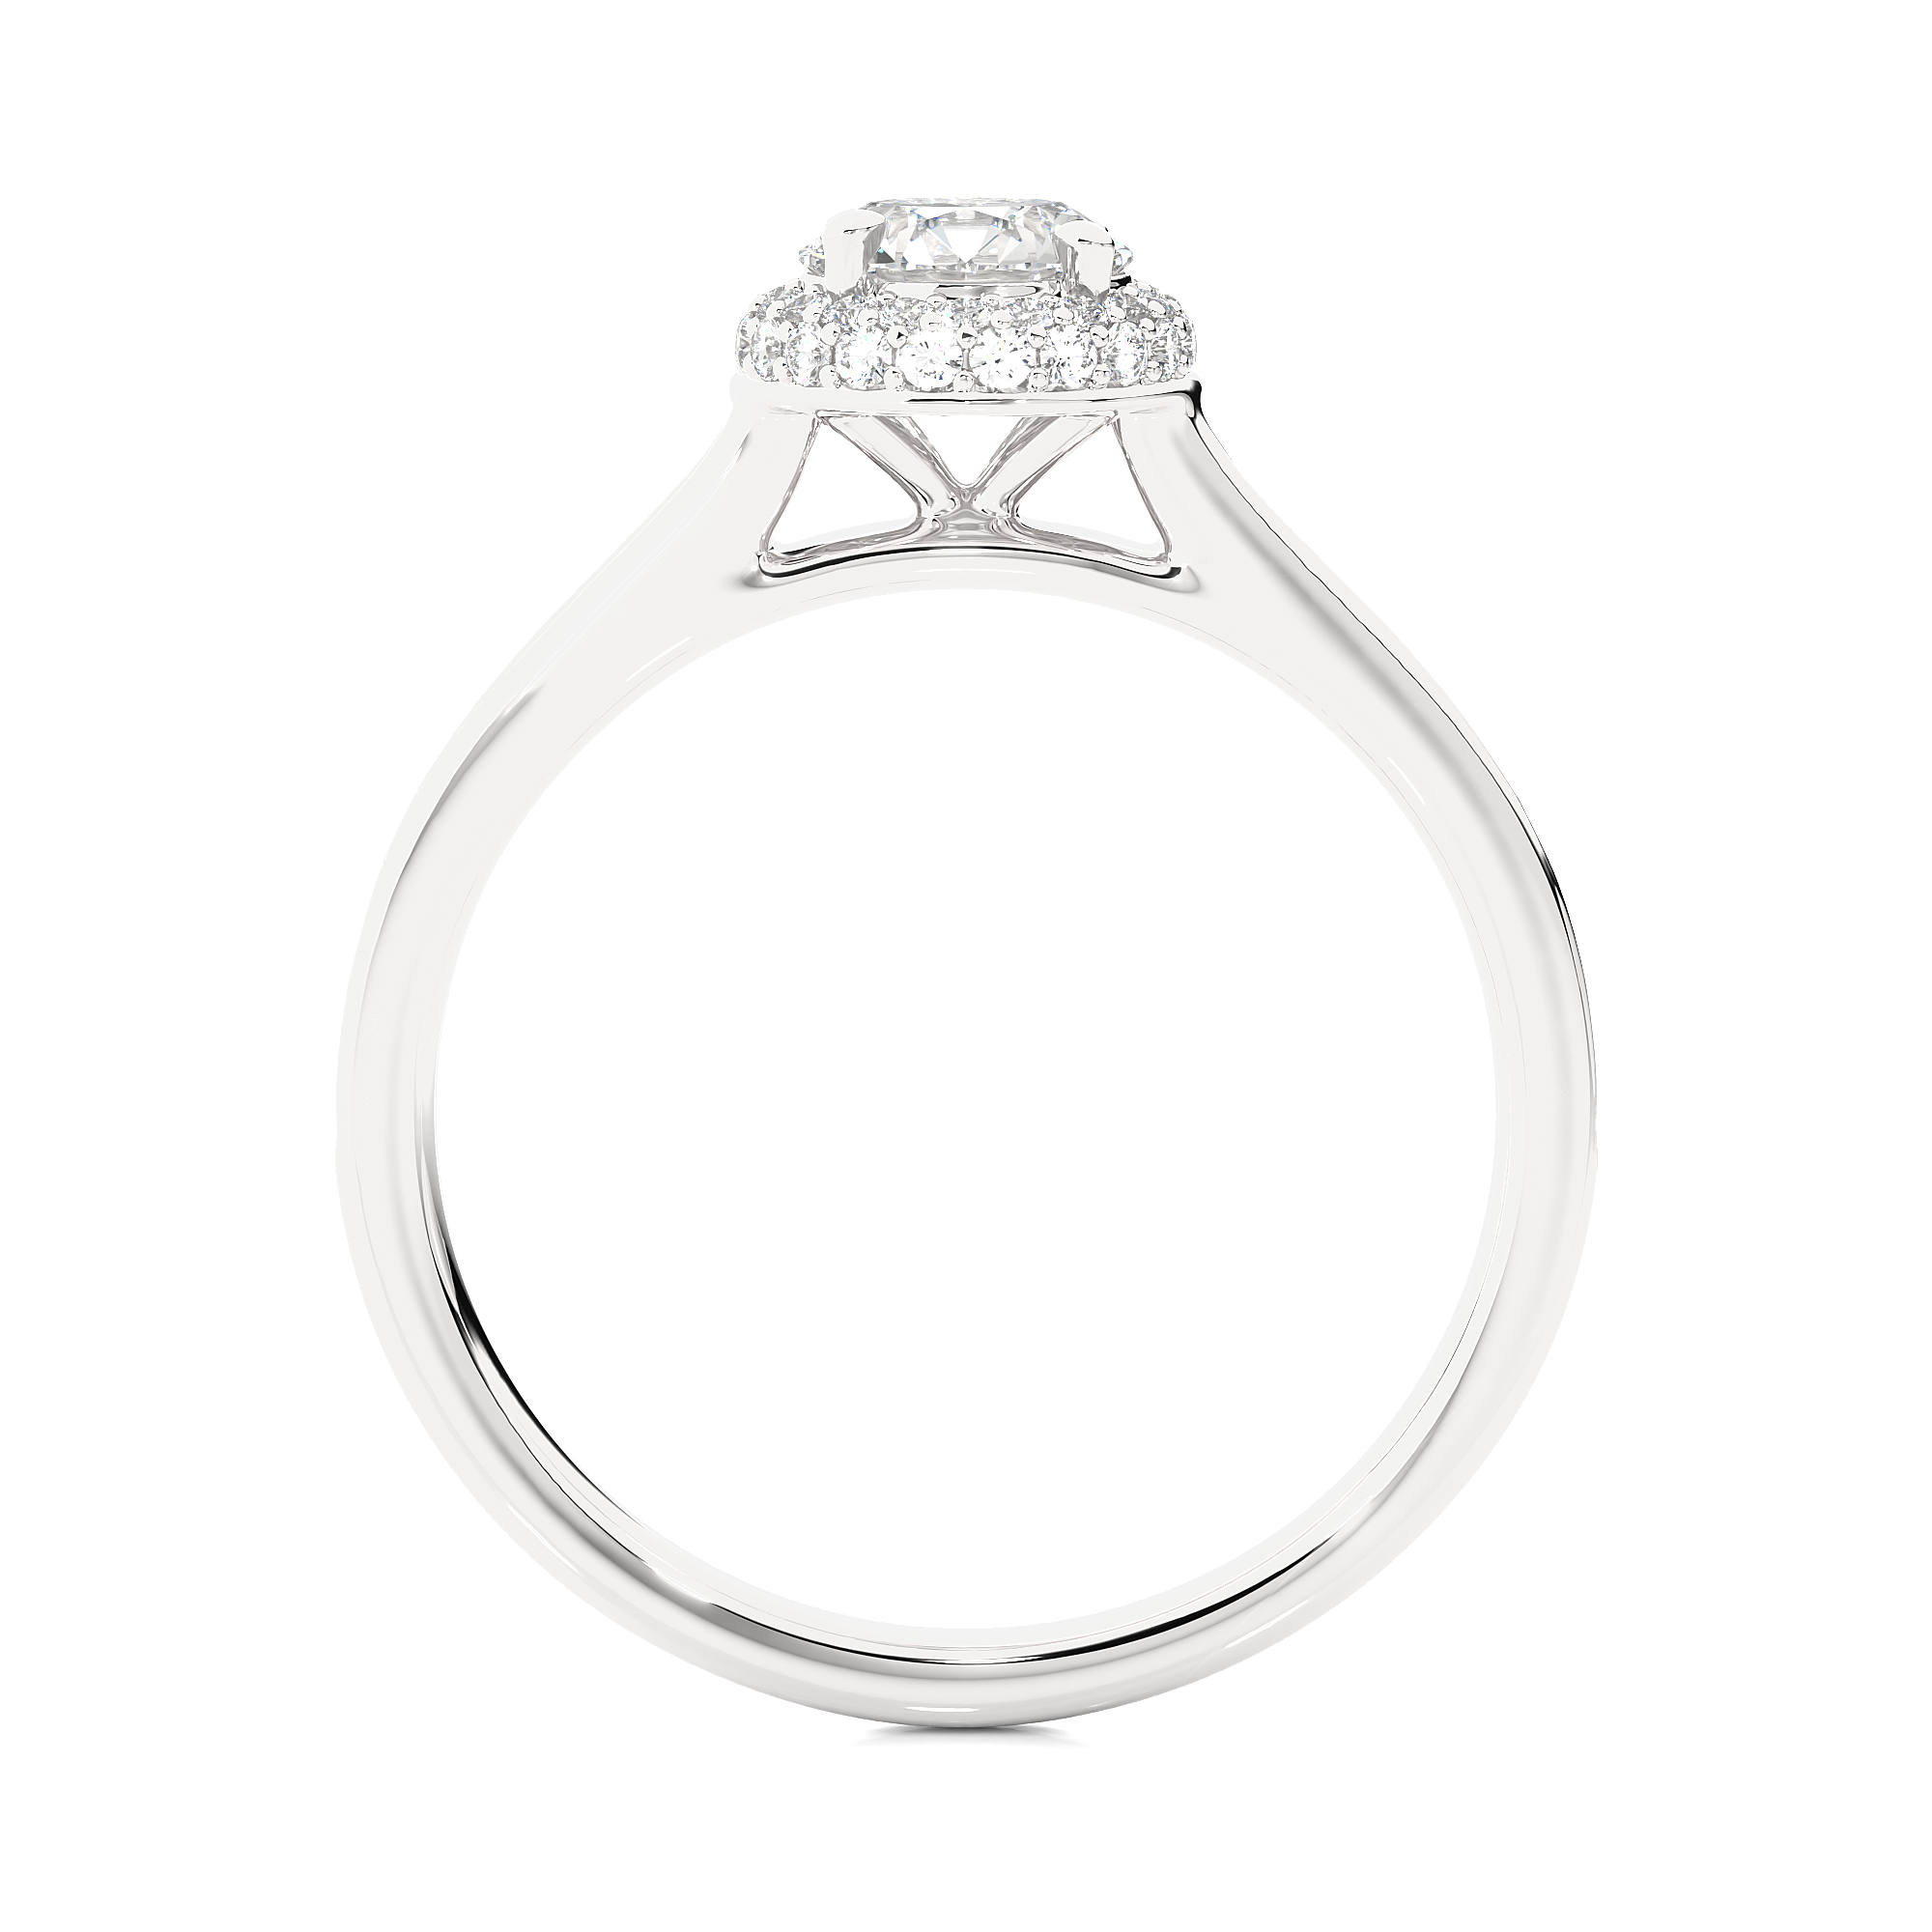 Yen Ring - Solitaire Diamond Ring